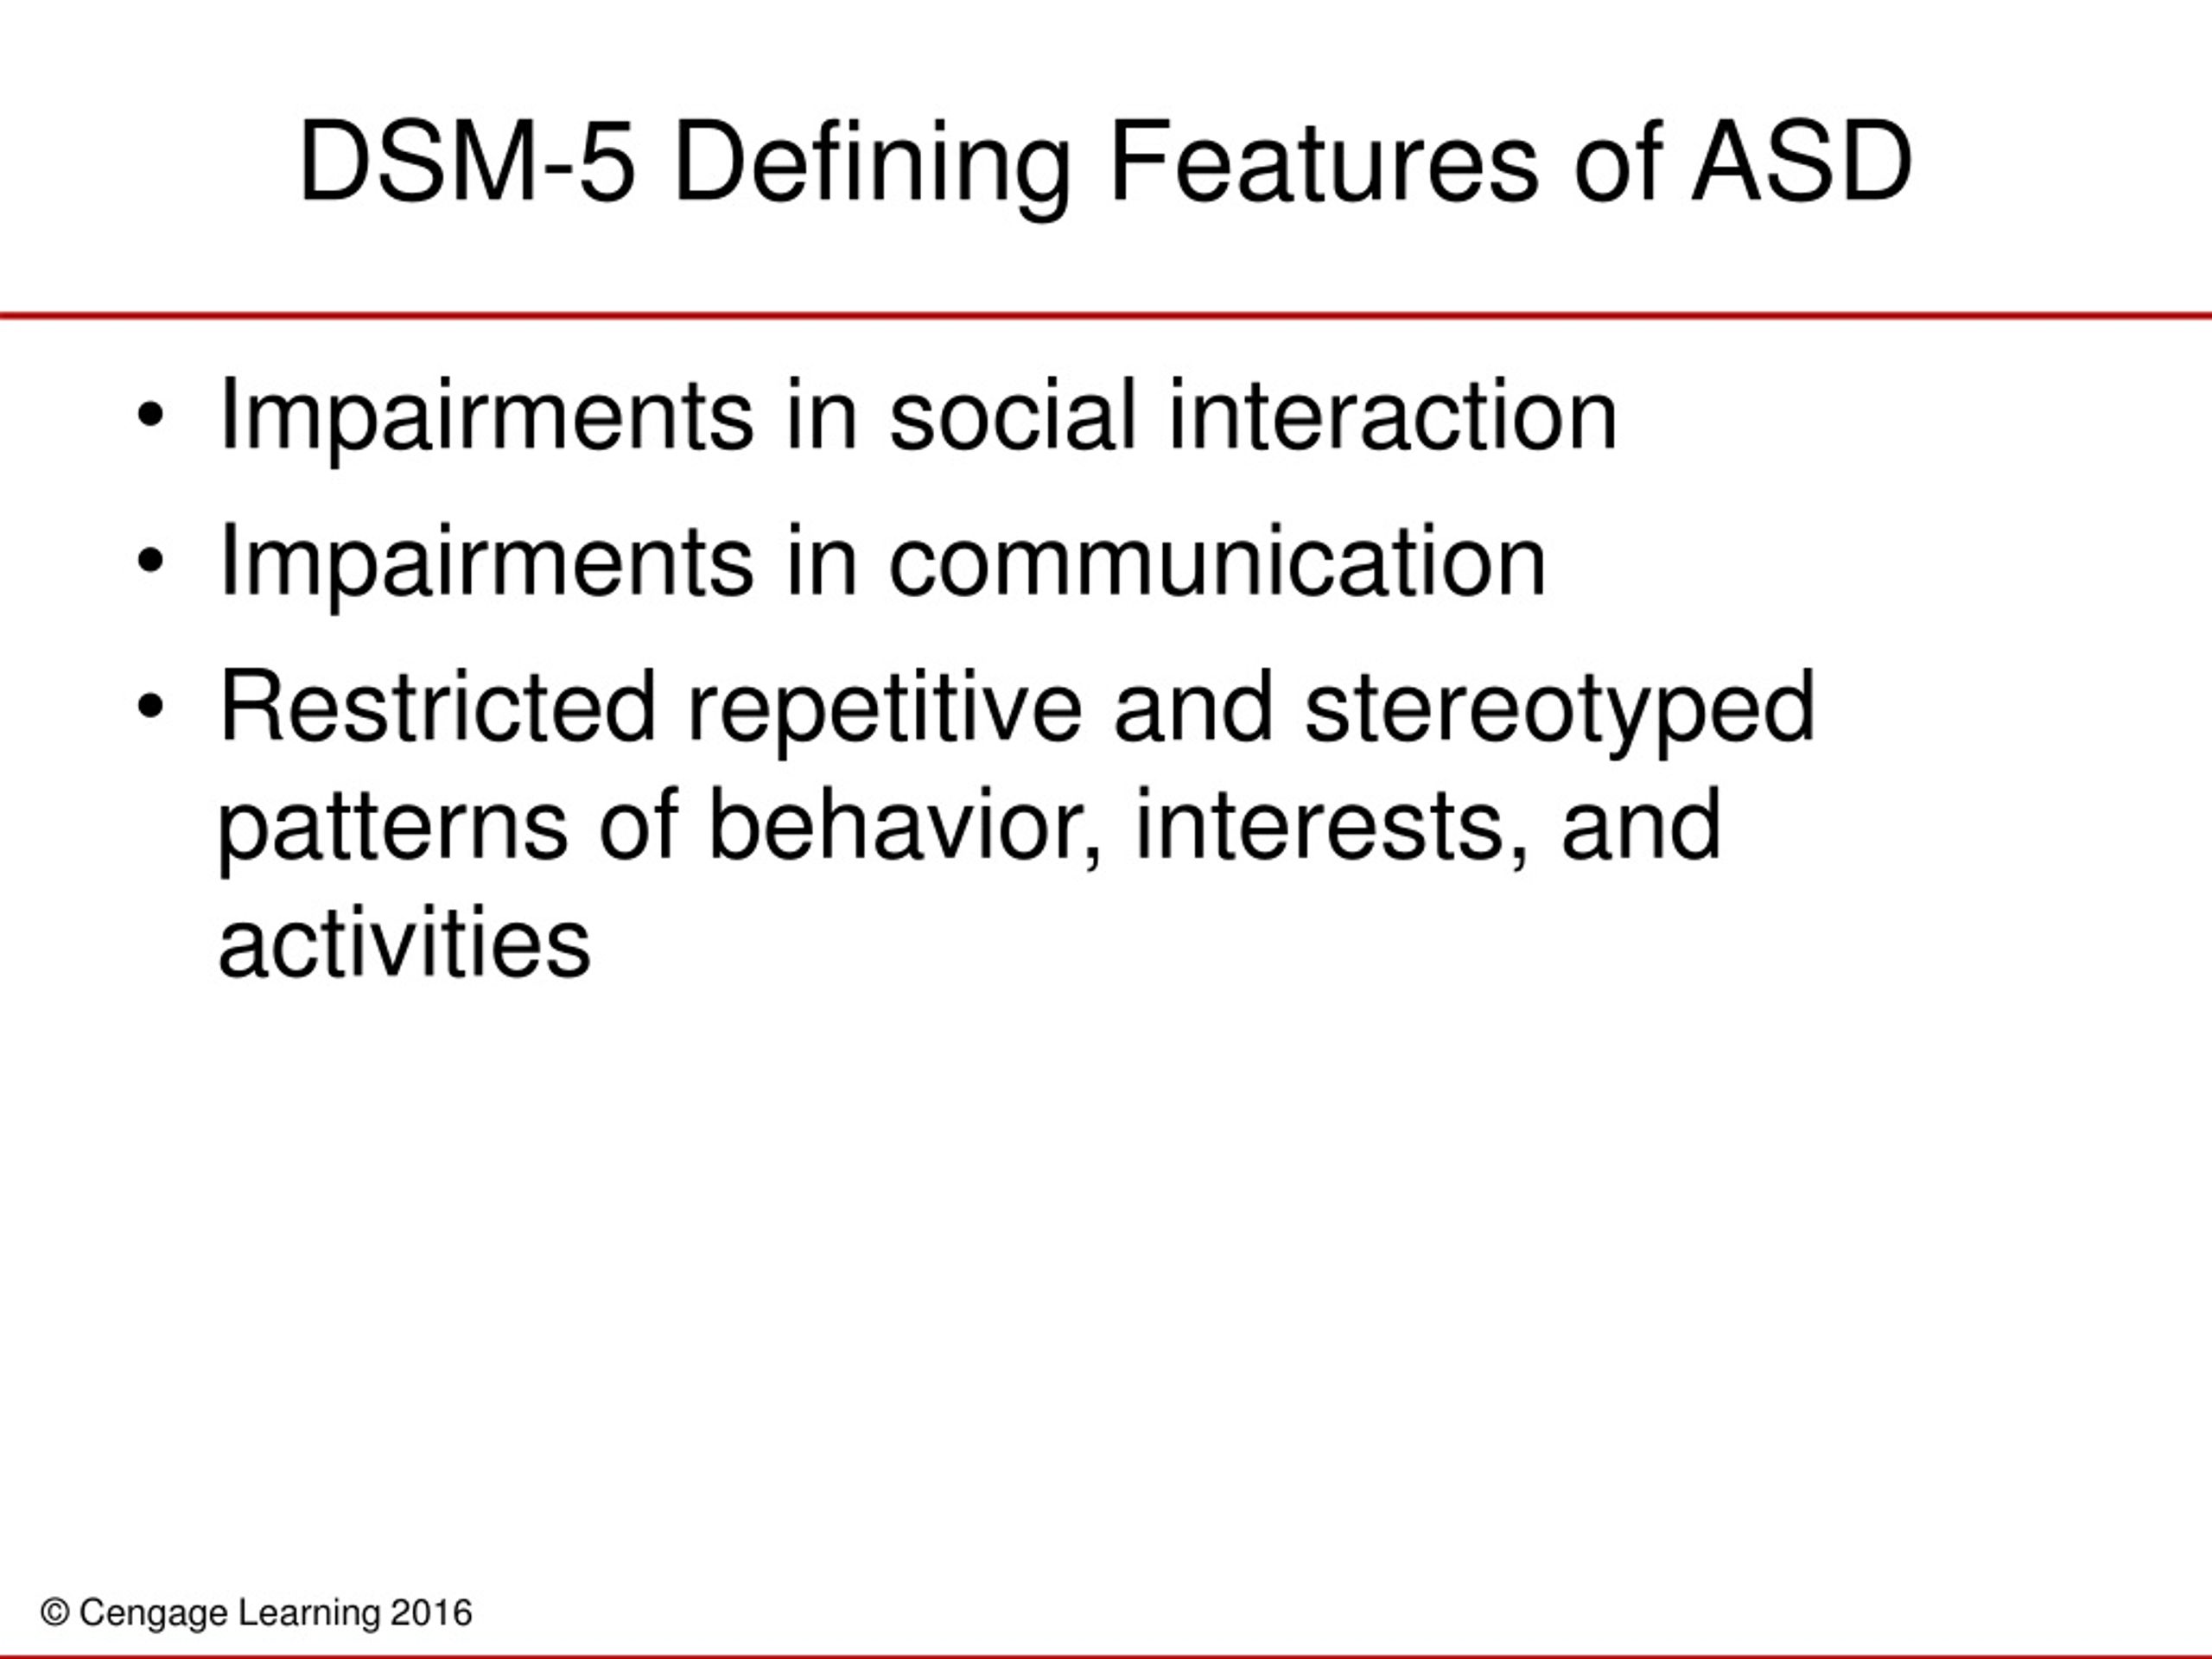 asd definition dsm 5